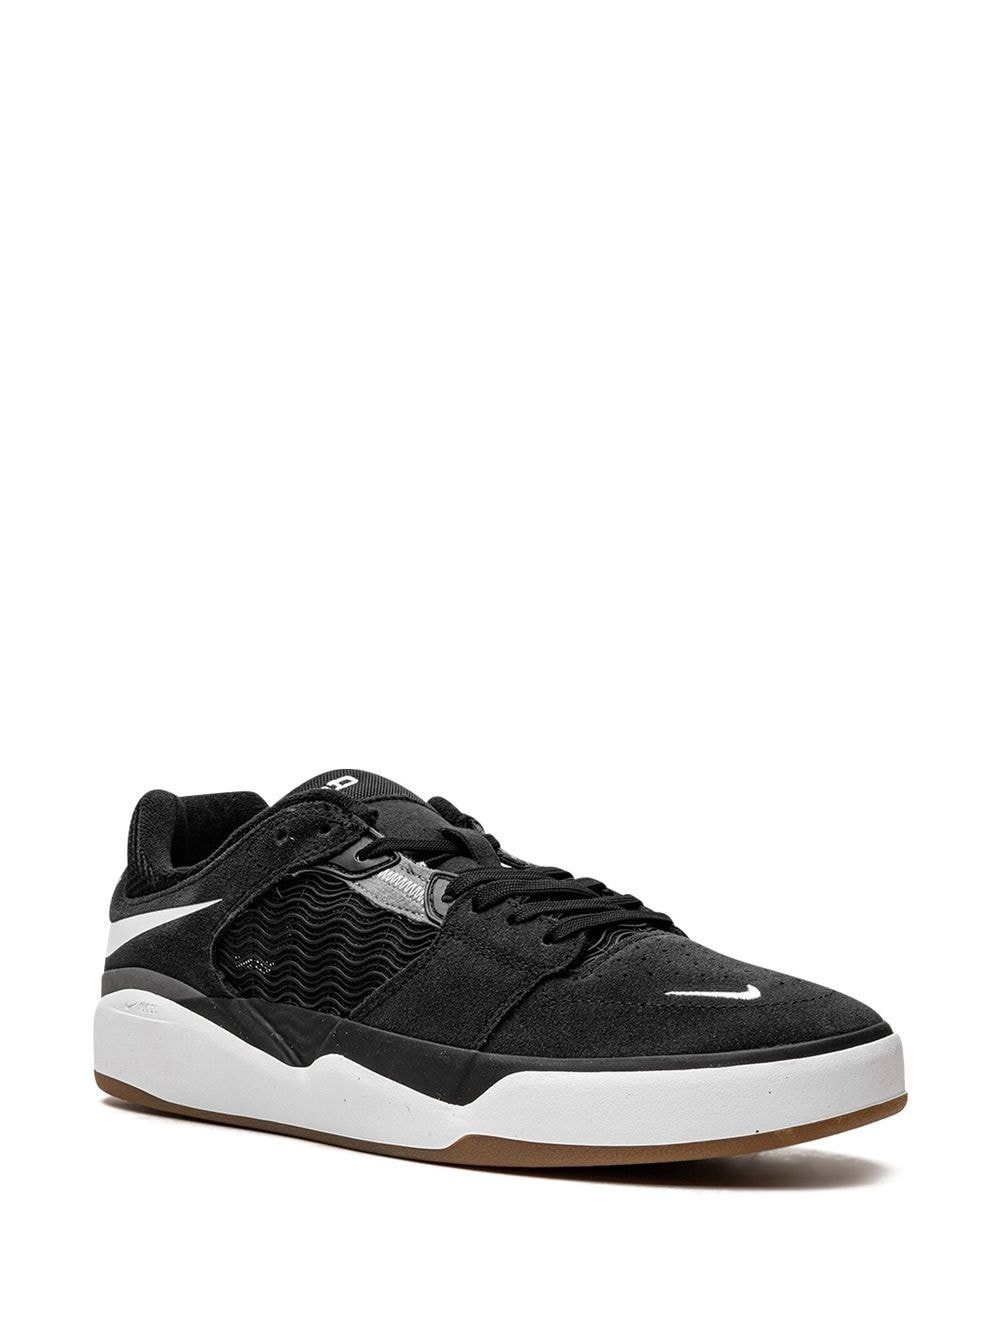 SB Ishod Wair "Black/White" sneakers - 2